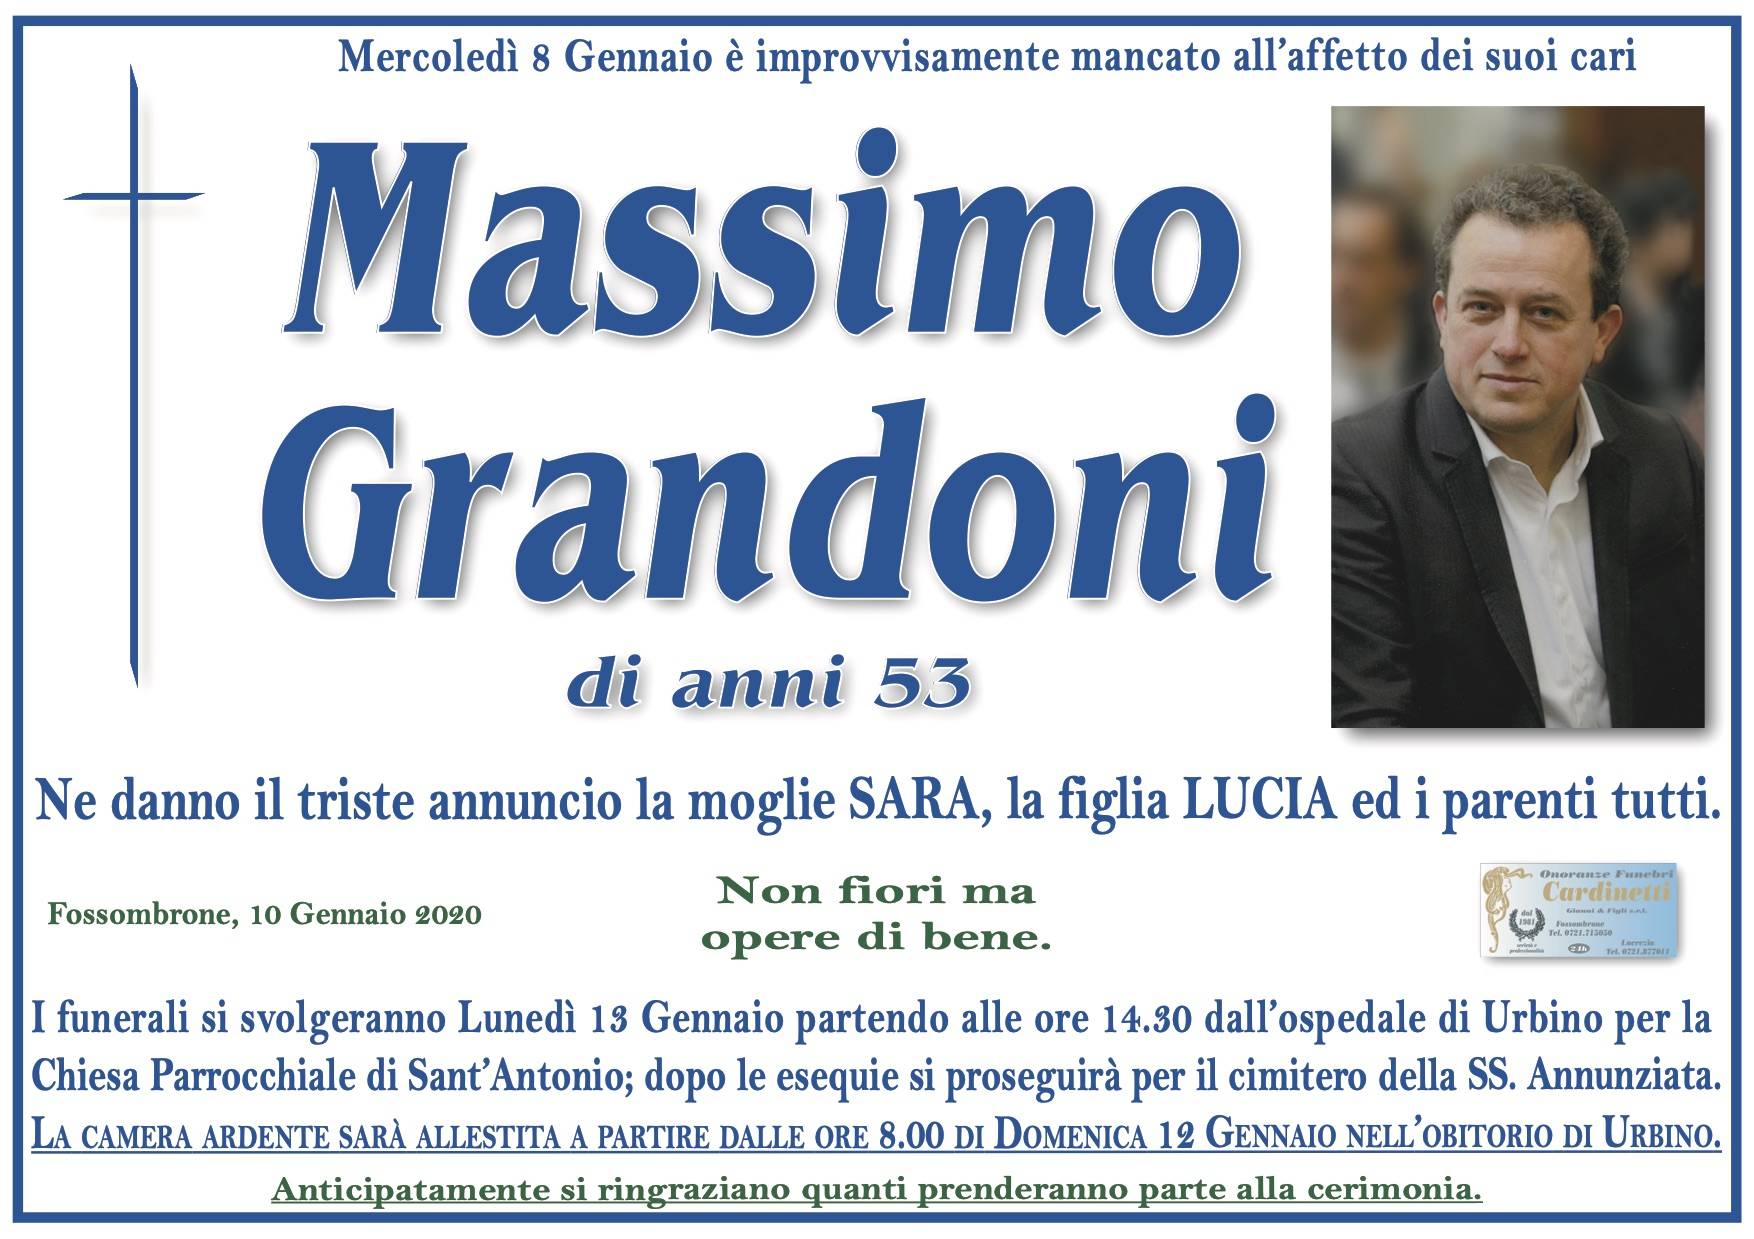 Massimo Grandoni